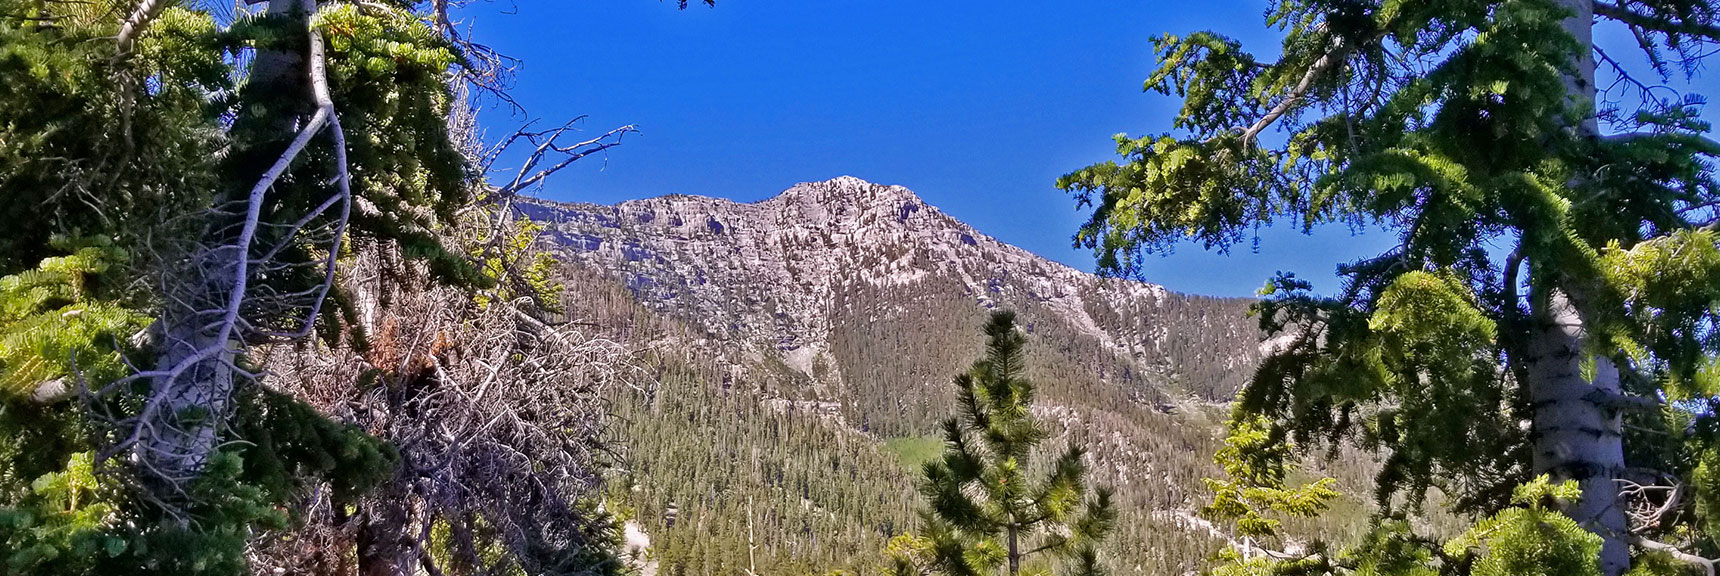 Lee Peak Viewed Through the Trees | Lee to Kyle Canyon | Gradual Mid Ridge Approach | Mt. Charleston Wilderness | Spring Mountains, Nevada